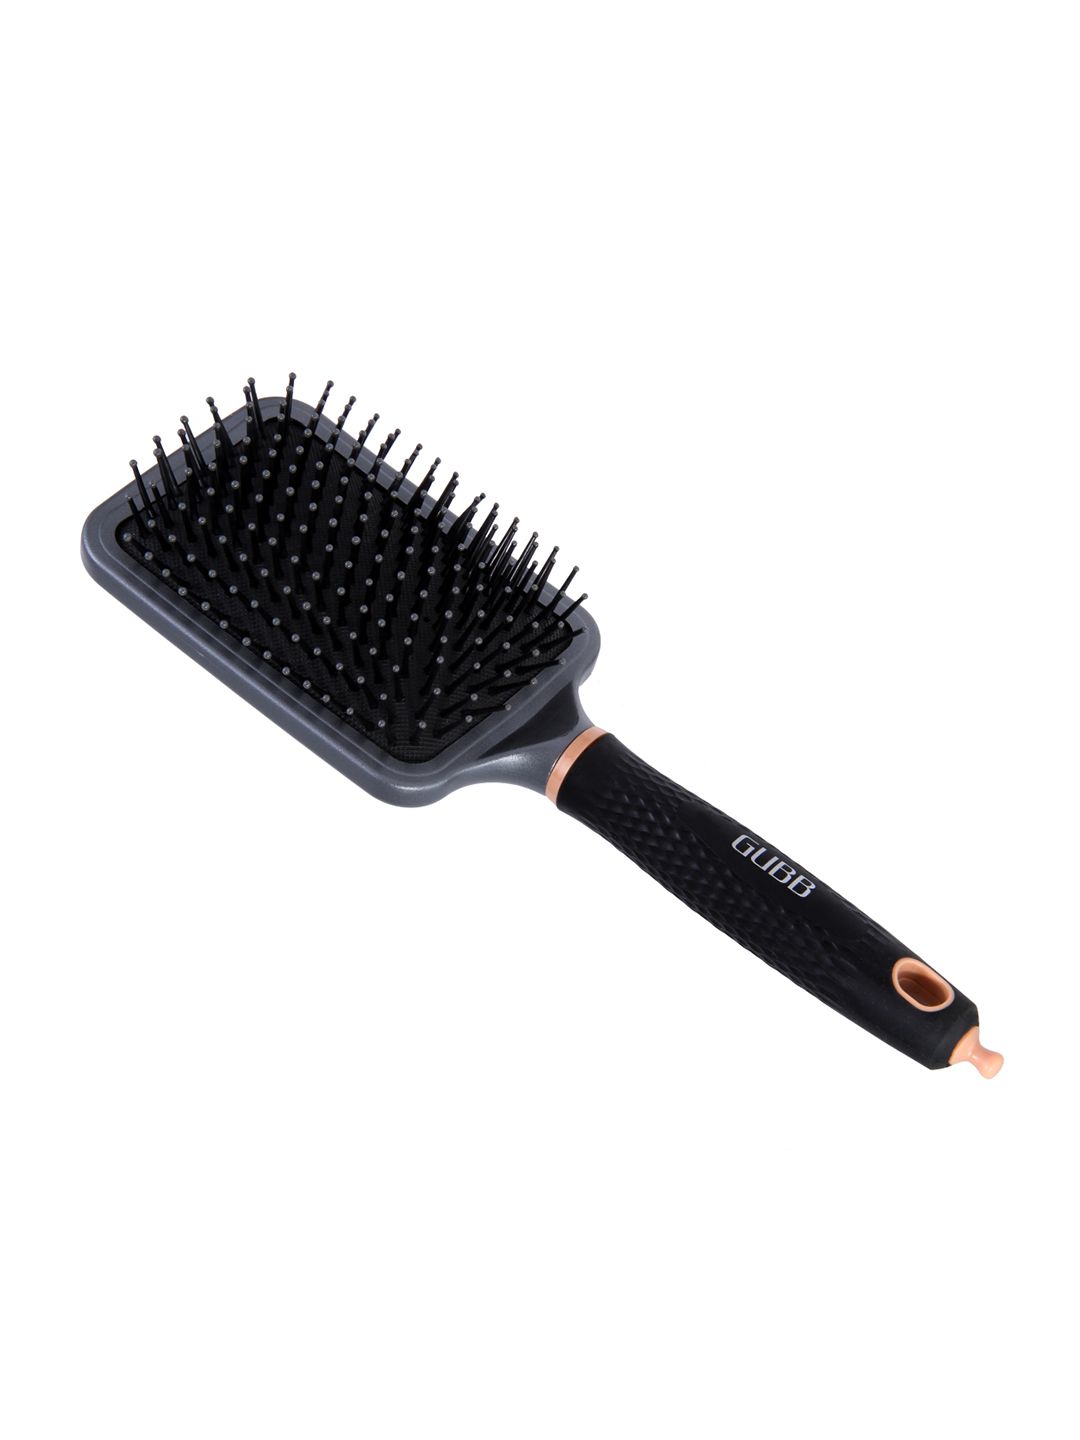 GUBB Unisex Black Elite Range Paddle Hair Brush Comb With Pin Price in India